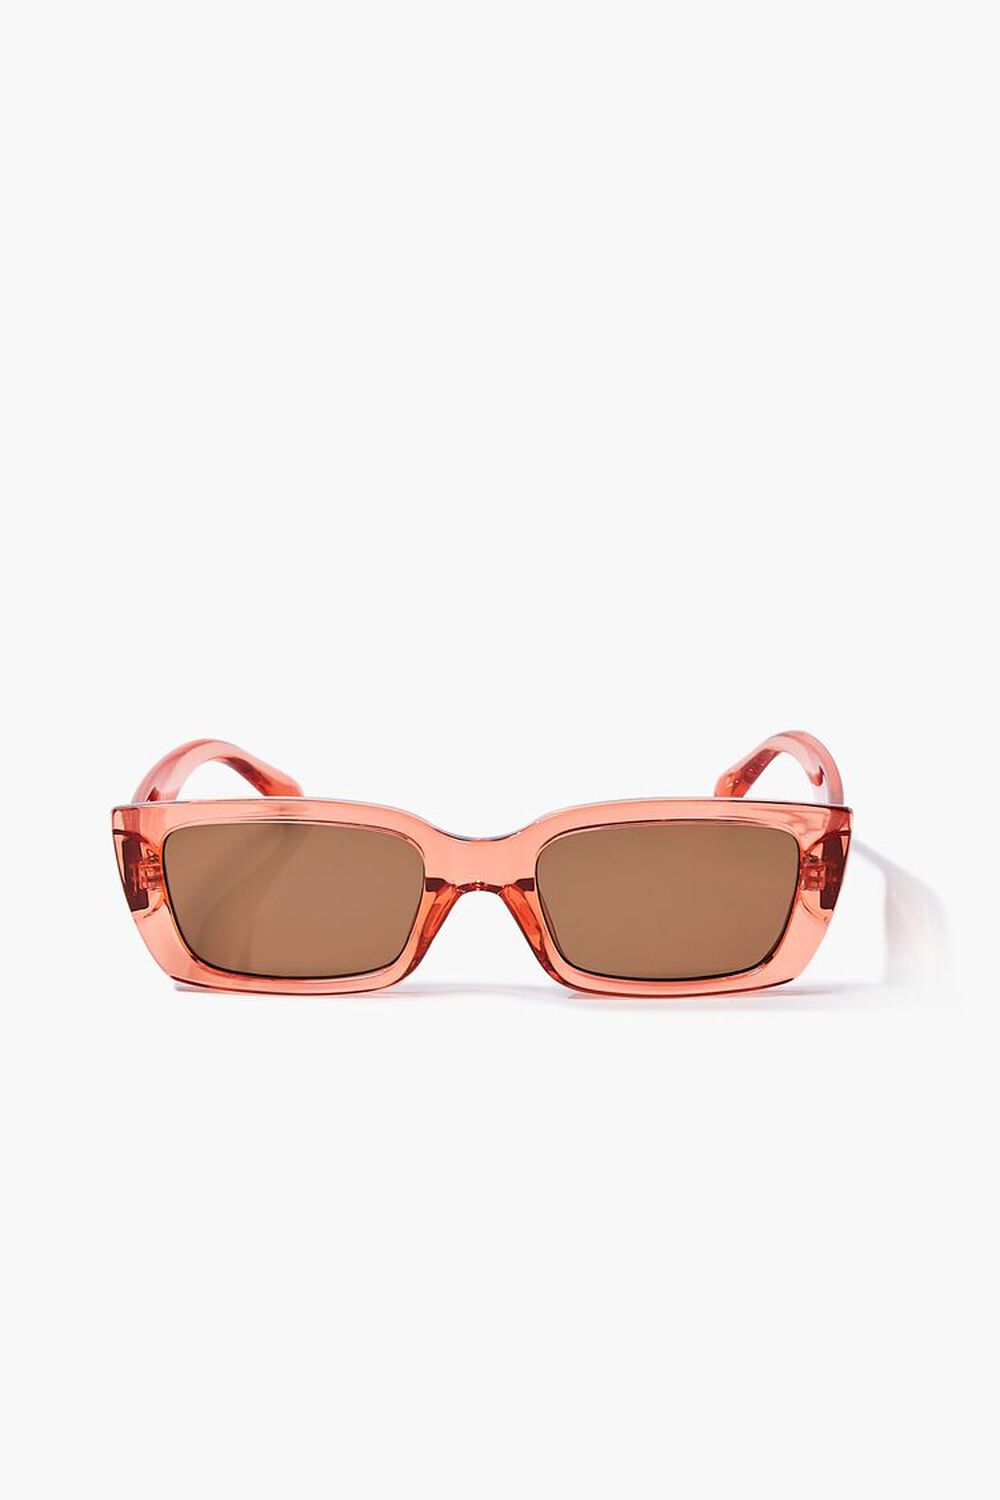 BLUSH/BROWN Semi-Translucent Rectangle Sunglasses, image 1